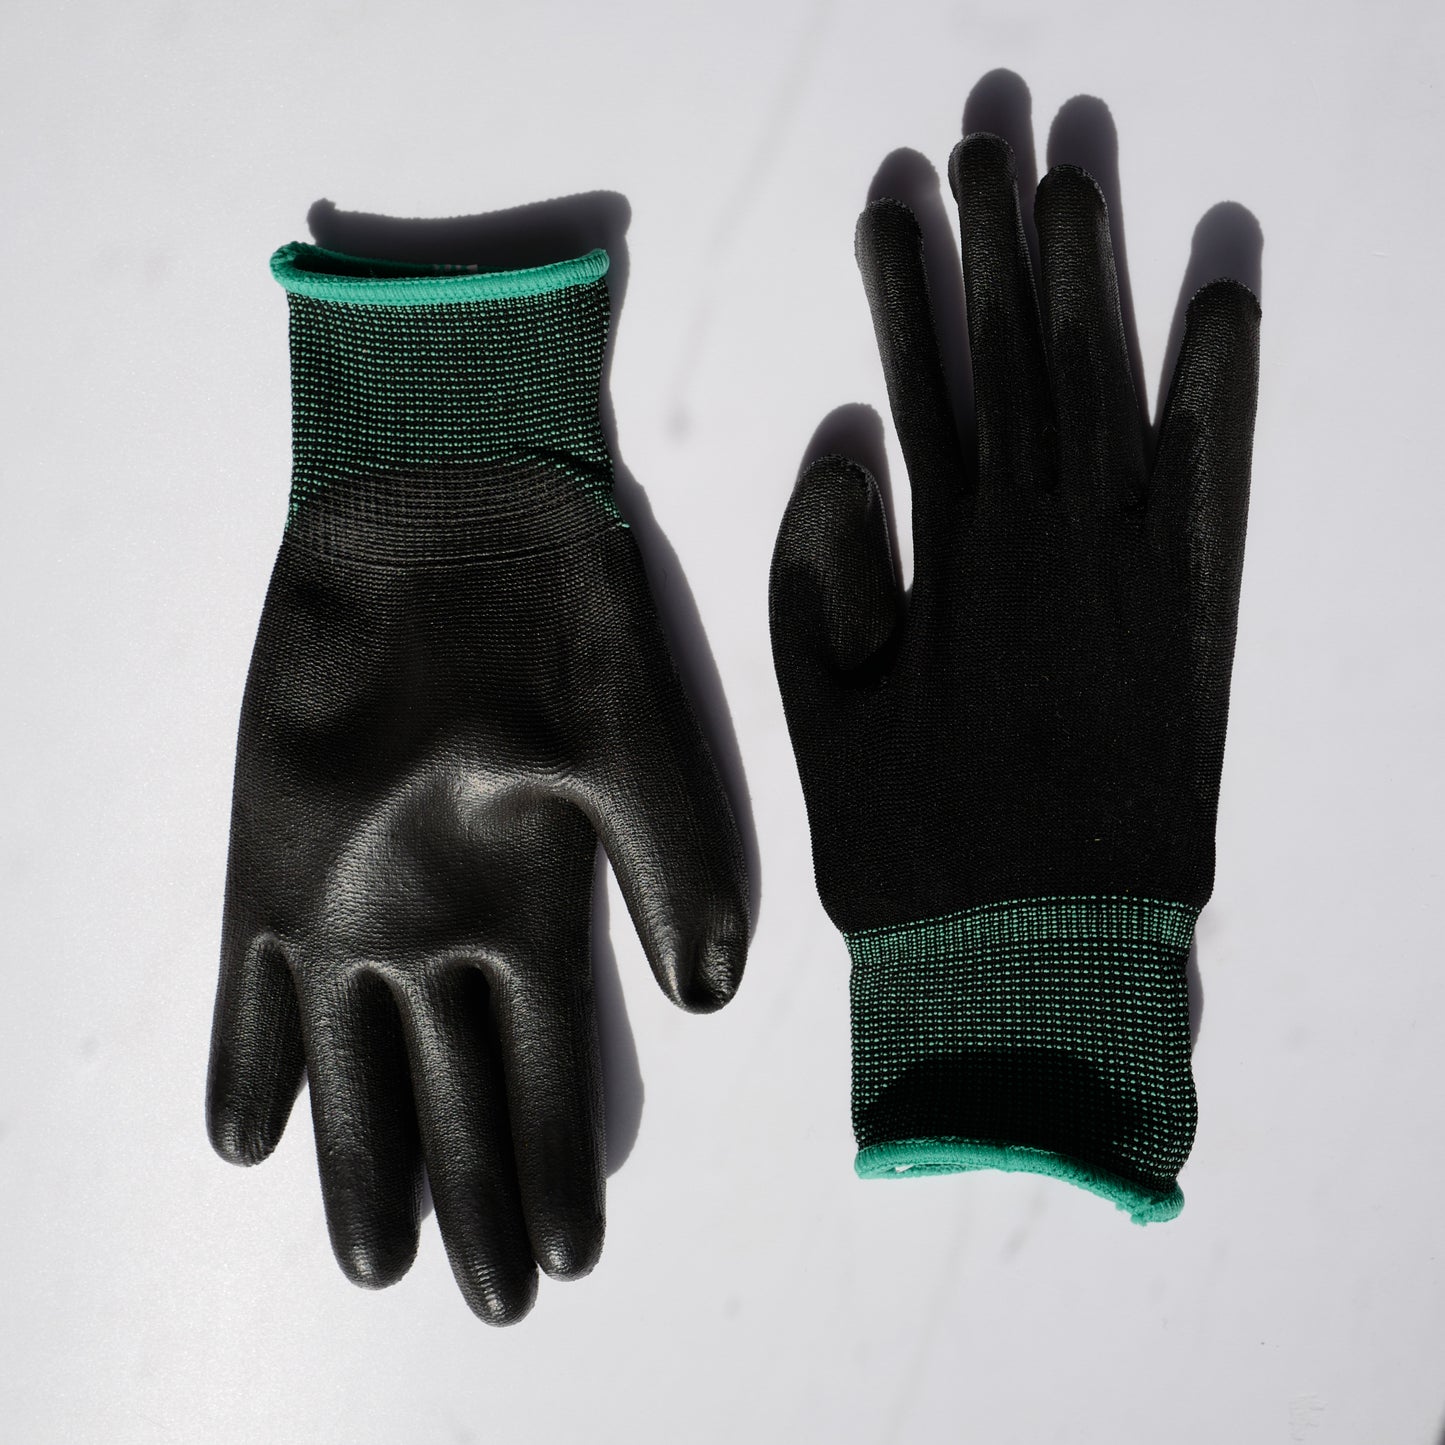 Easy Fit Gardening Gloves